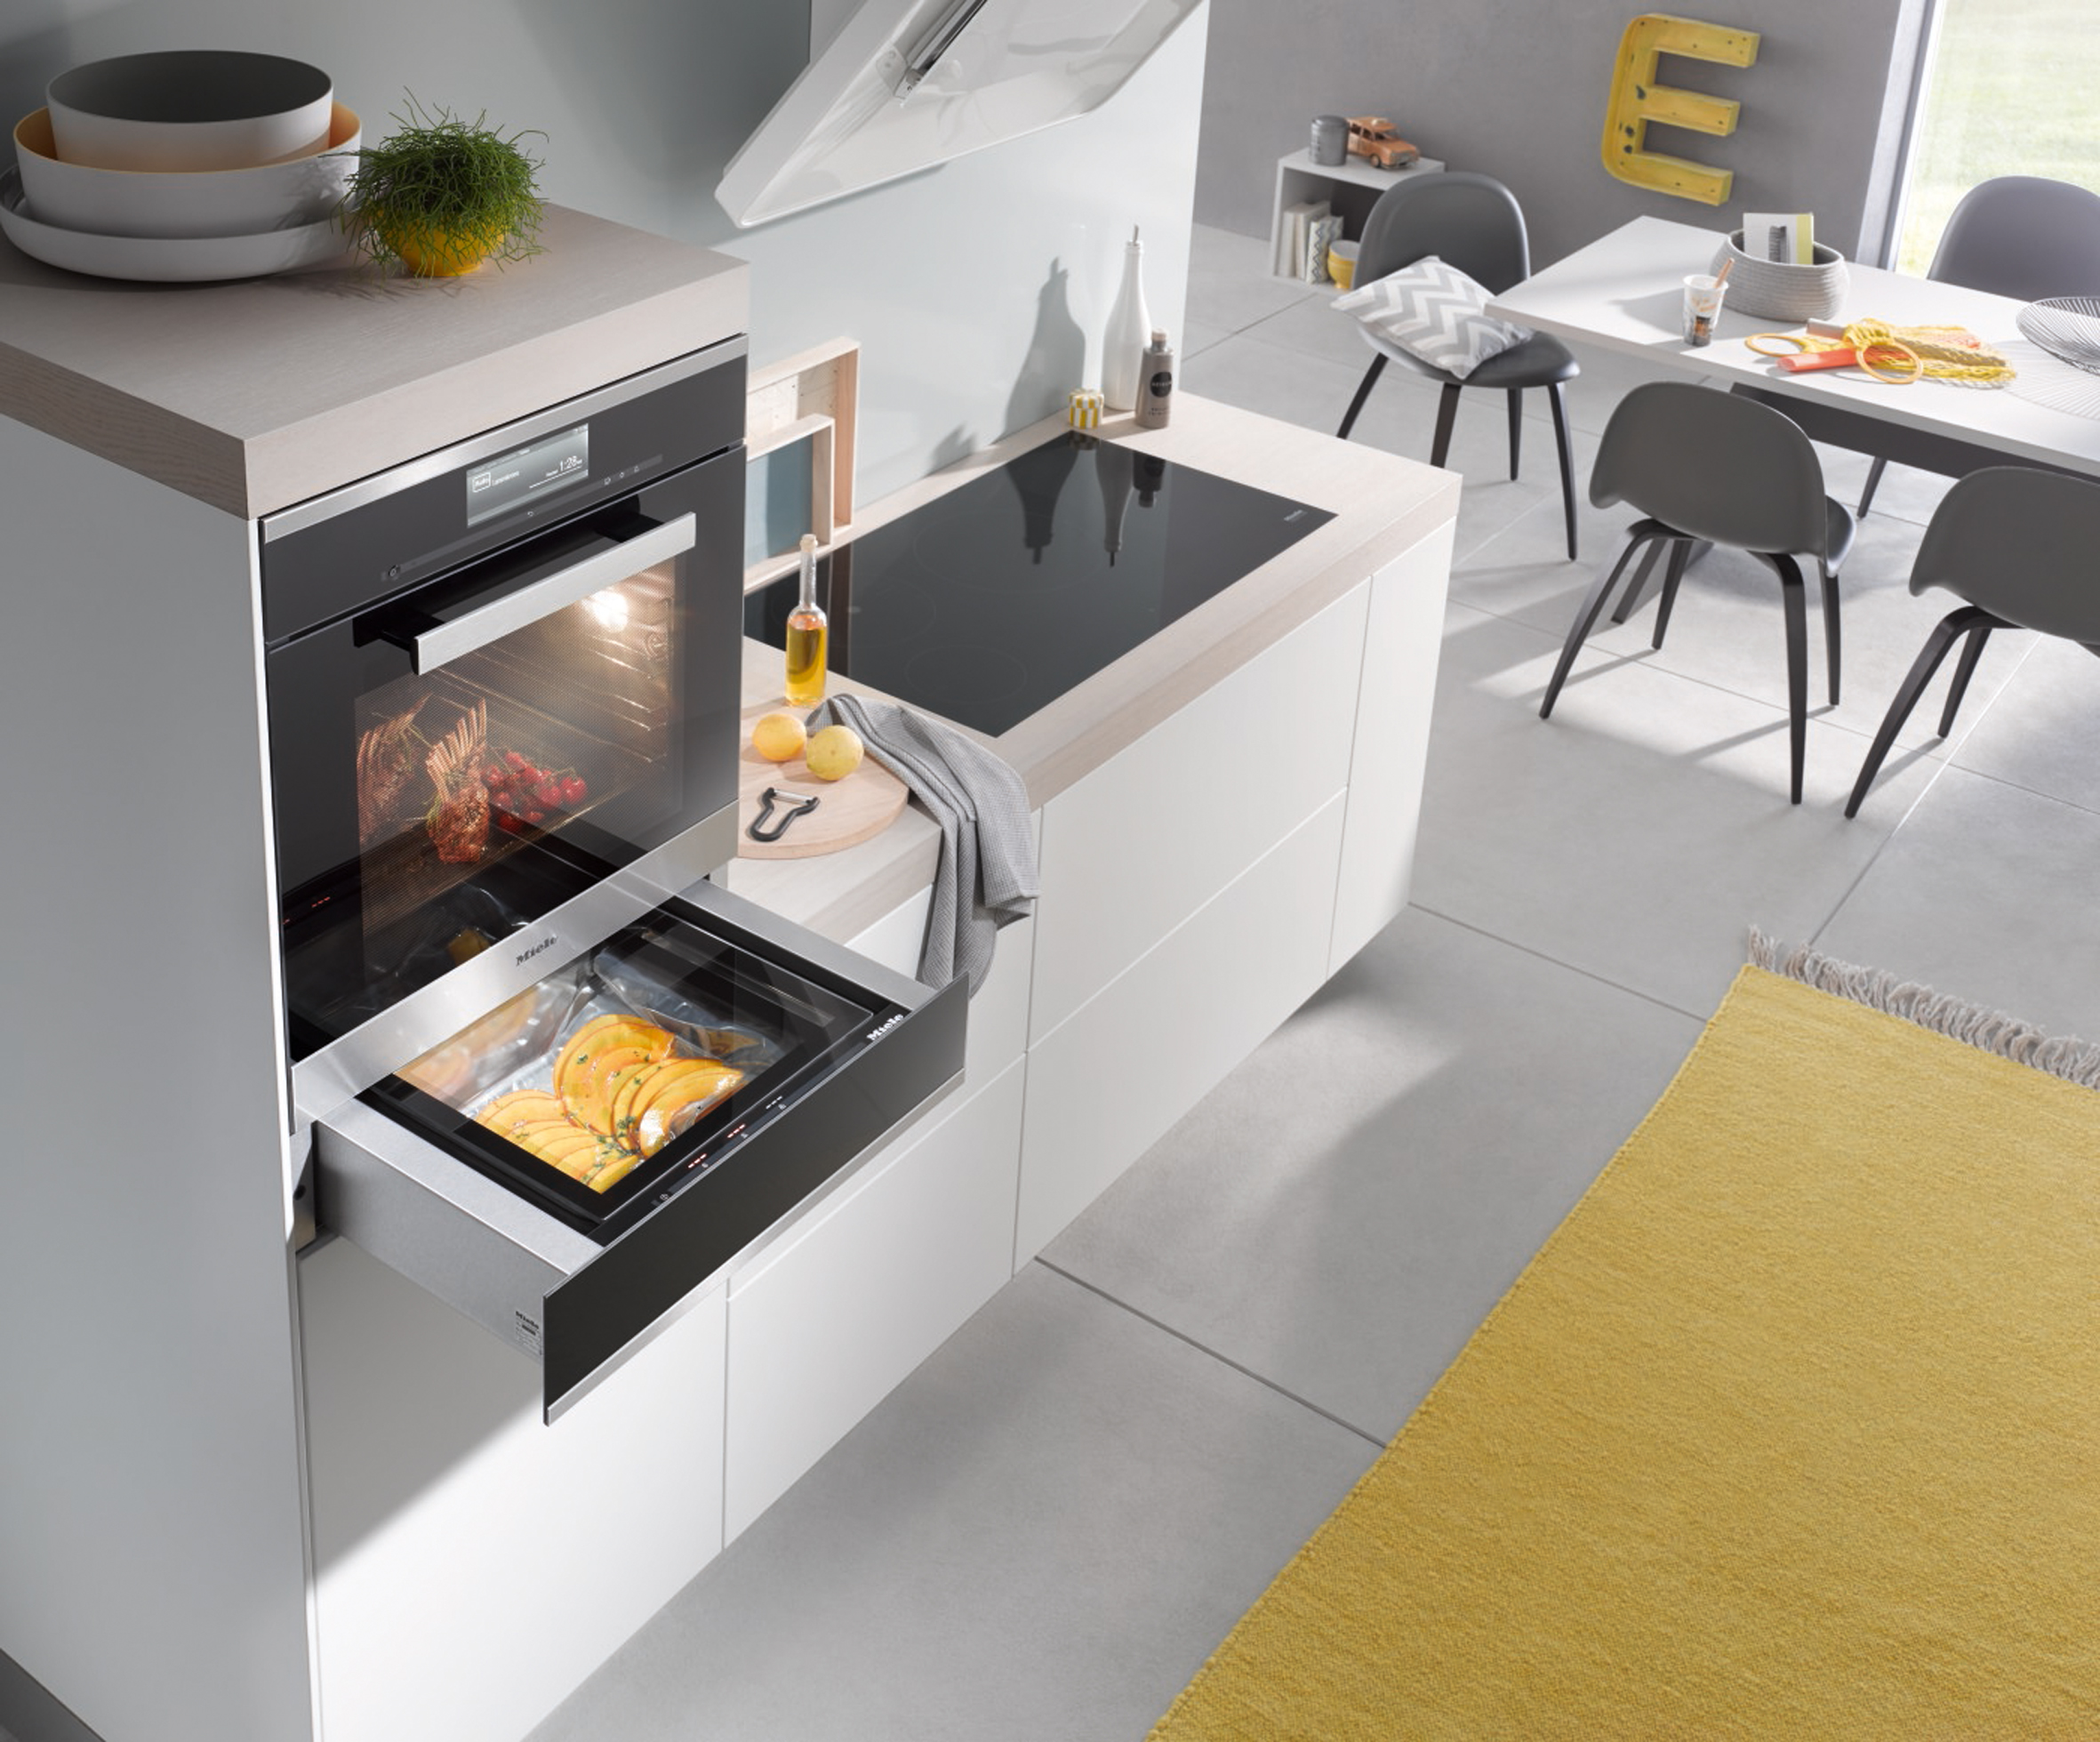 Miele 5 questions when choosing appliances warming drawer